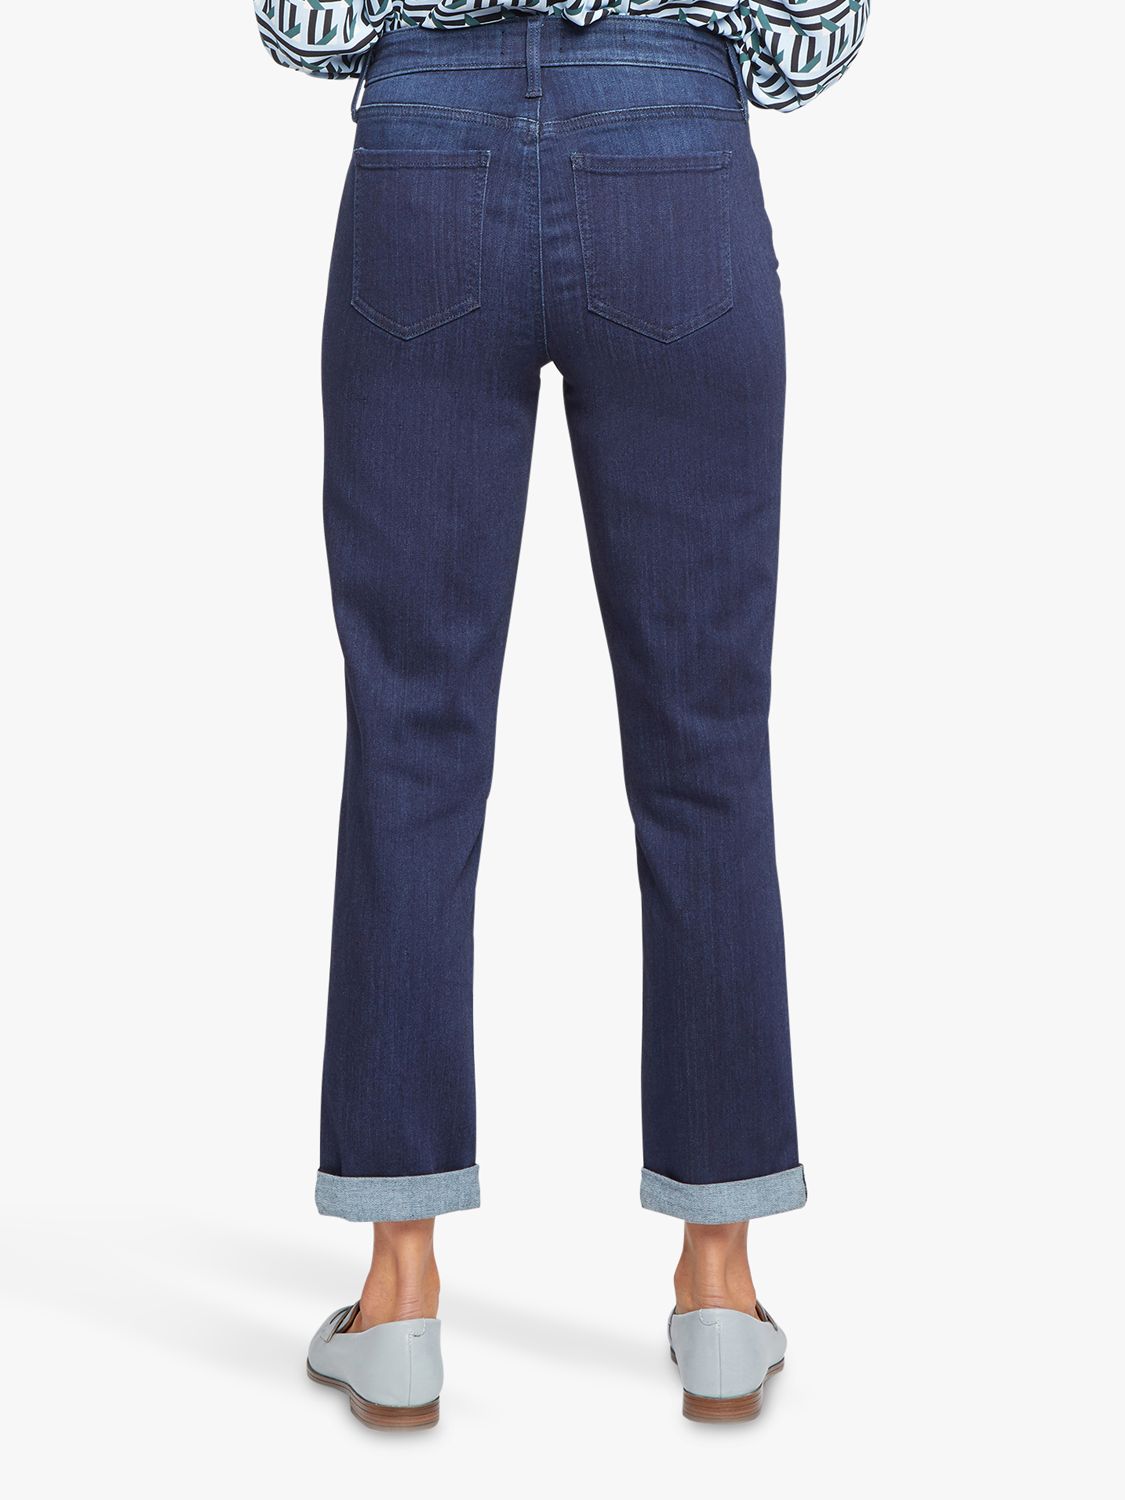 Buy NYDJ Margot Girlfriend Roll Cuff Jeans, Highway Online at johnlewis.com